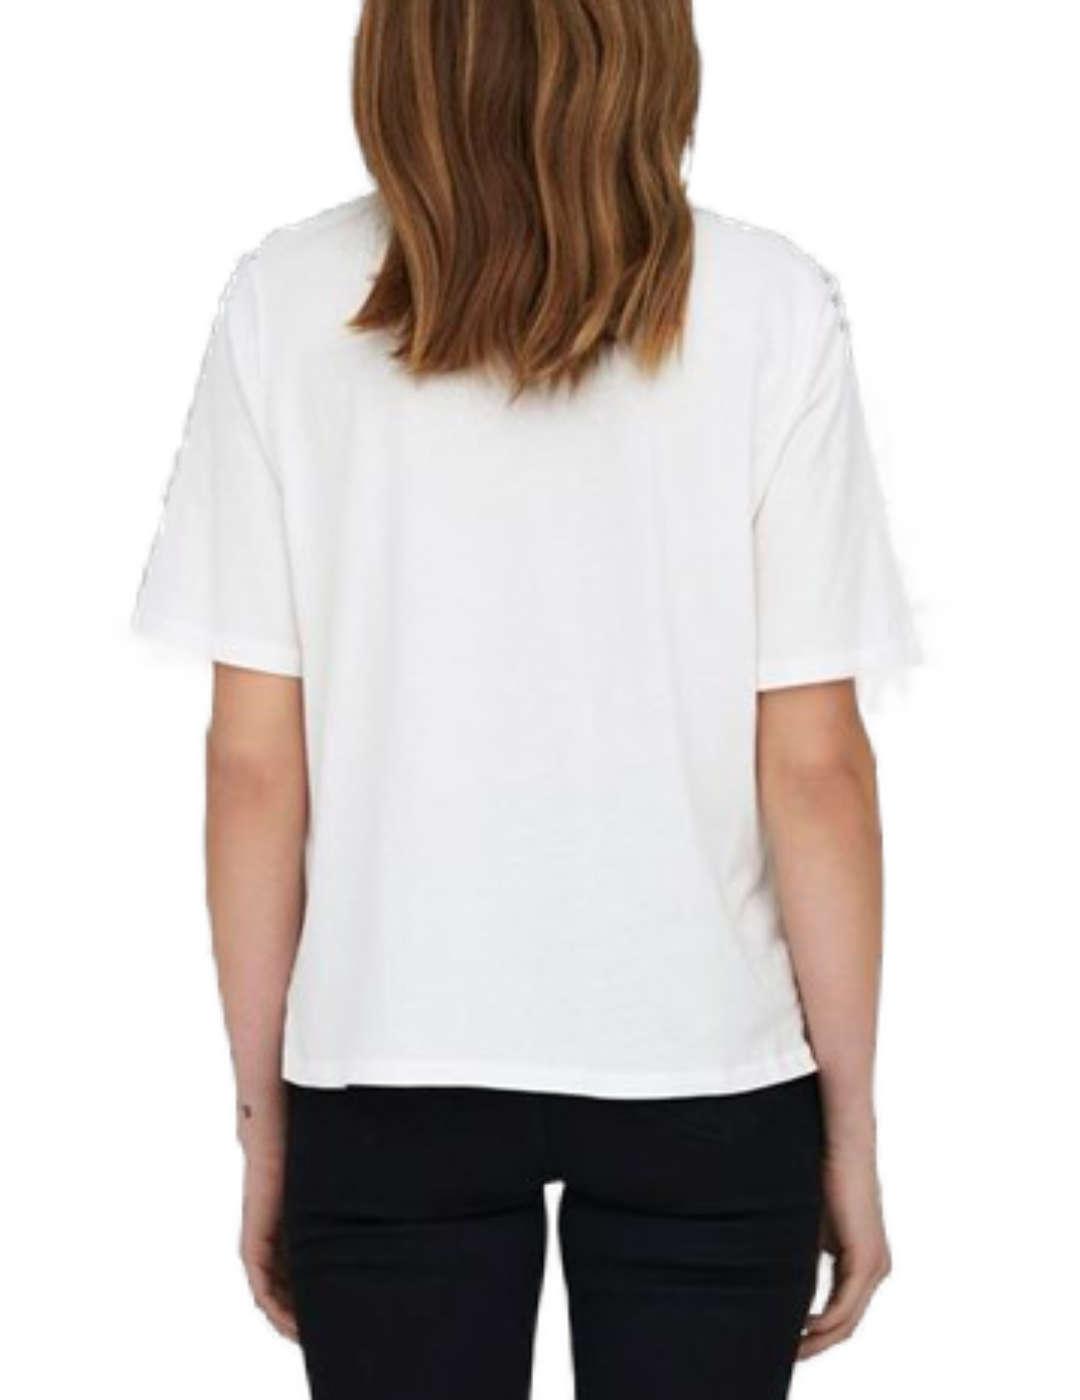 Camiseta Only Lulu blanco manga corta para mujer